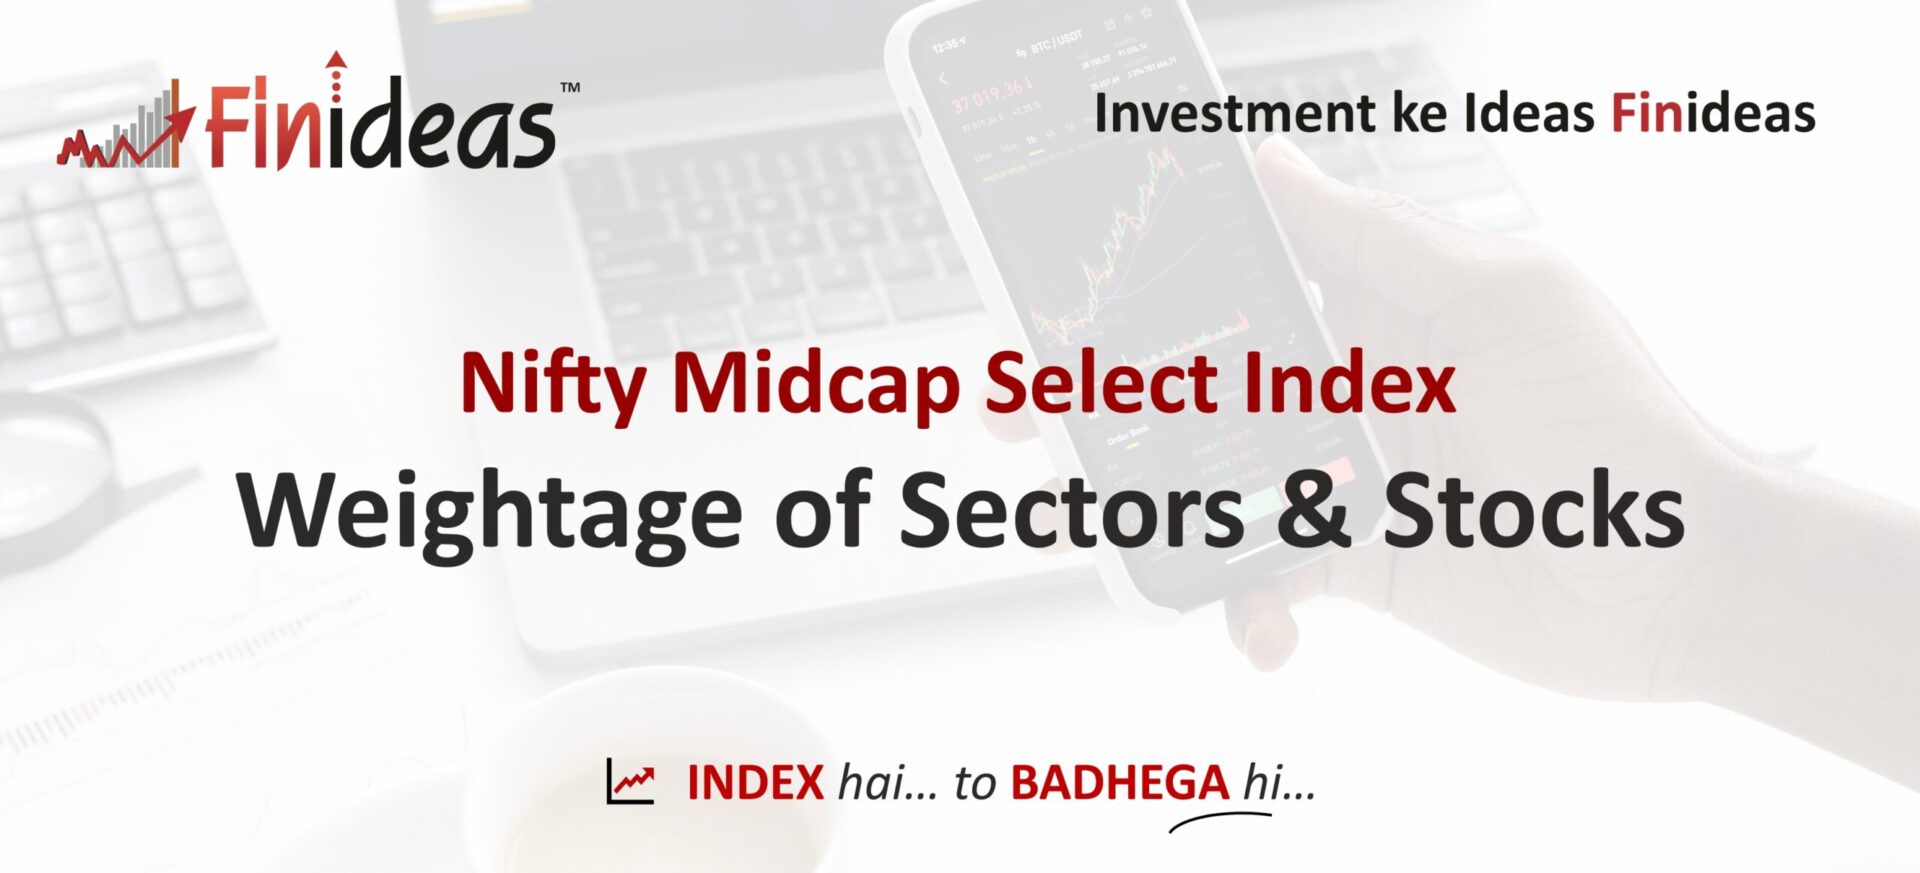 Nifty Midcap Select Index Finideas